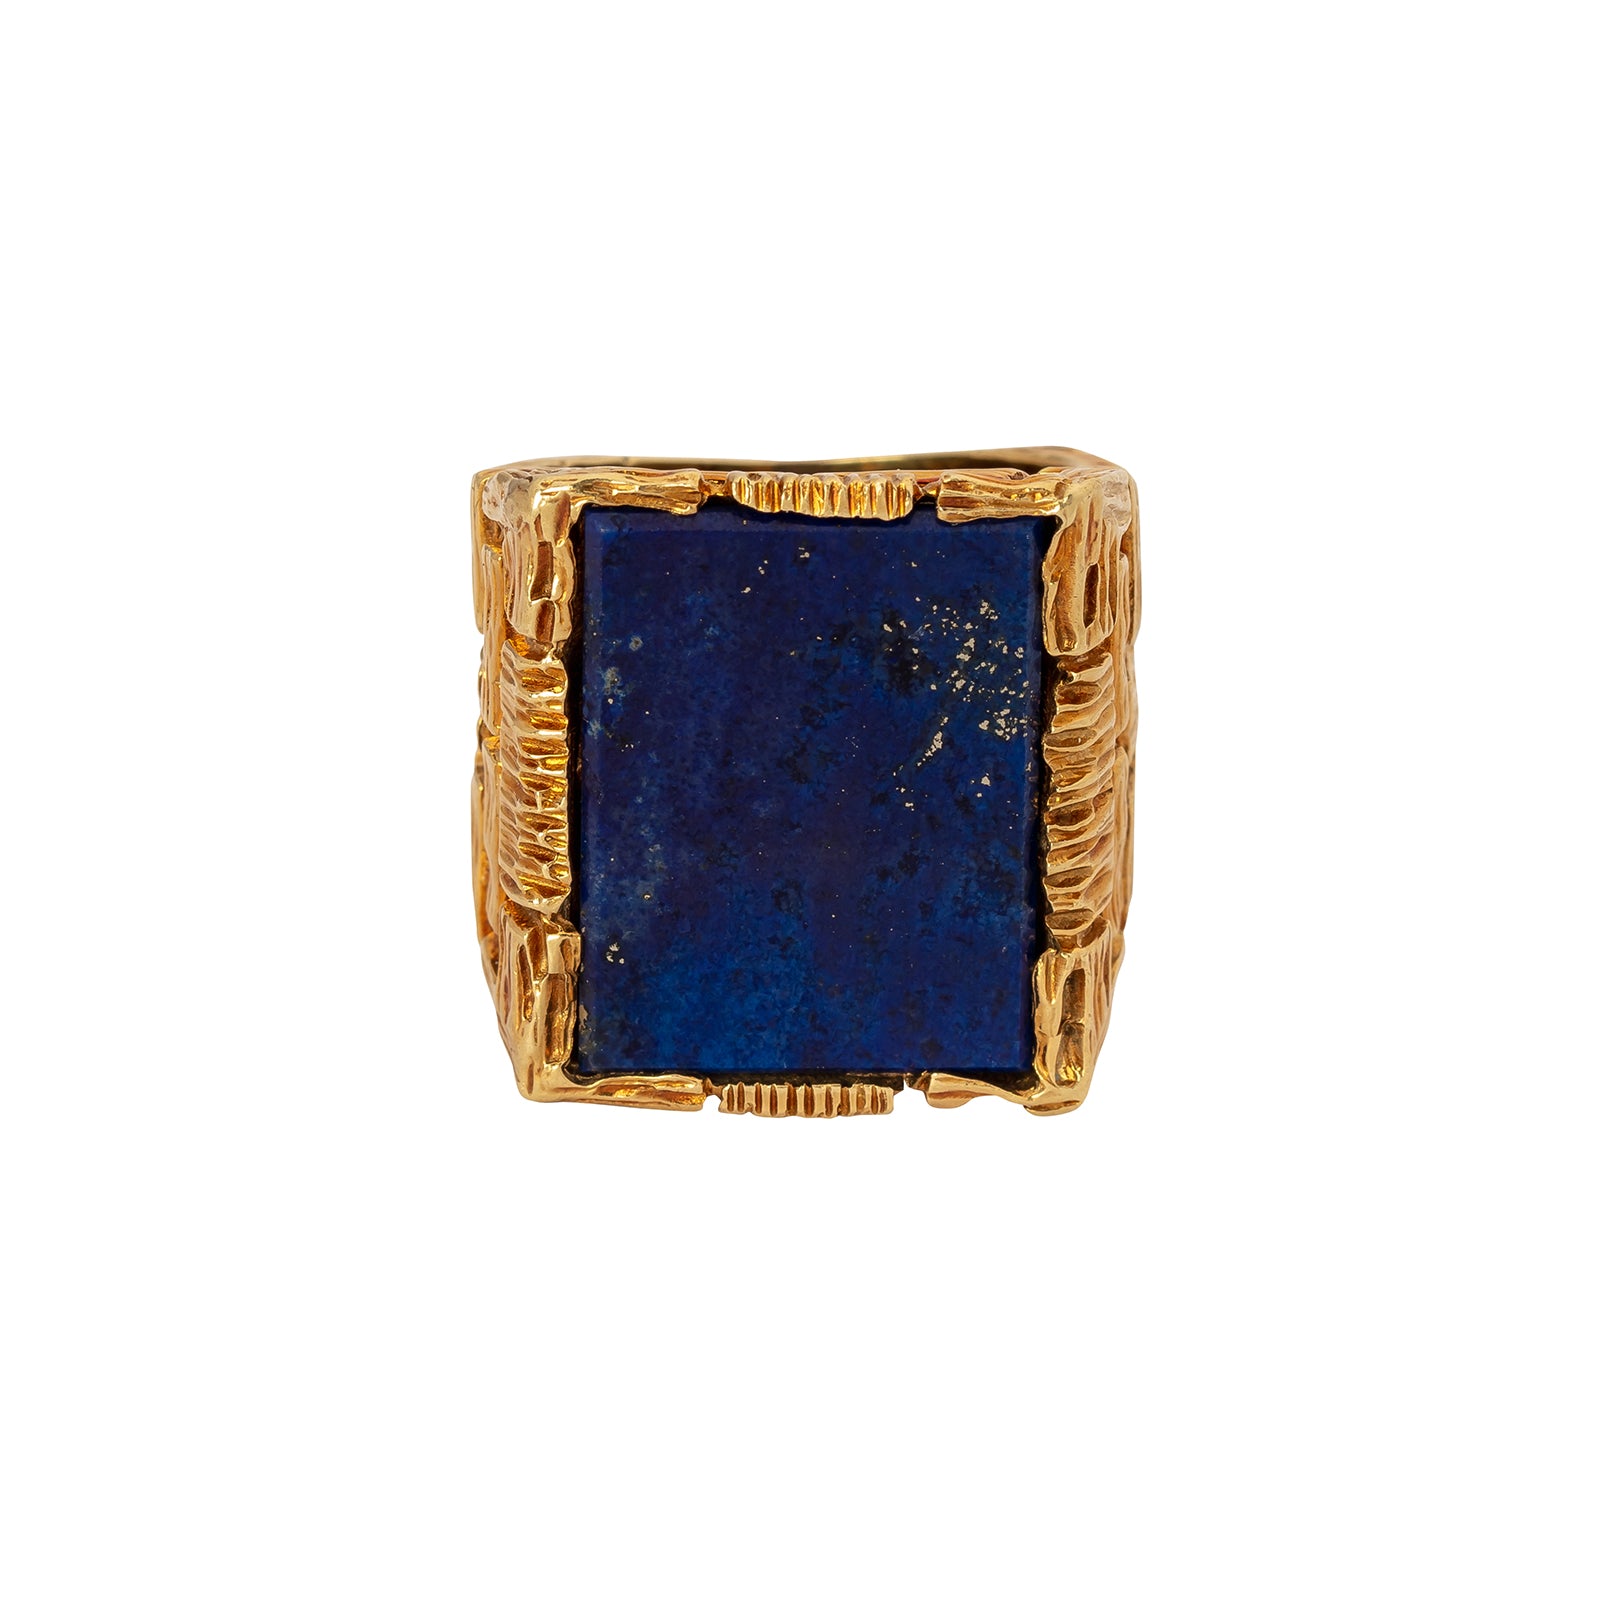 Antique Vintage Jewelry Rectangular Lapis Lazuli Ring Rings Broken English Jewelry